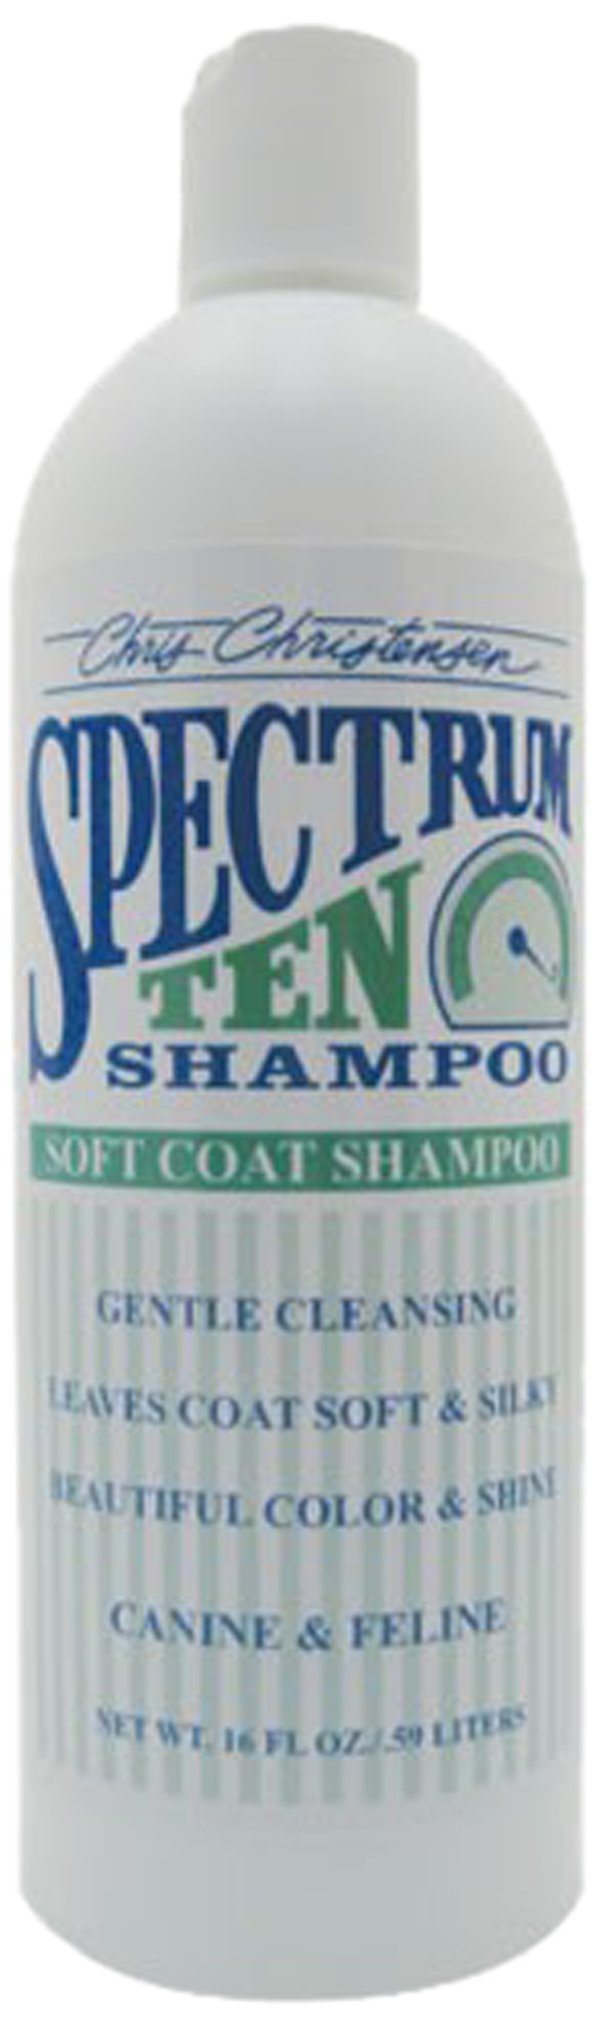 [Australia] - Chris Christensen Spectrum Ten Shampoo-16 ounce 